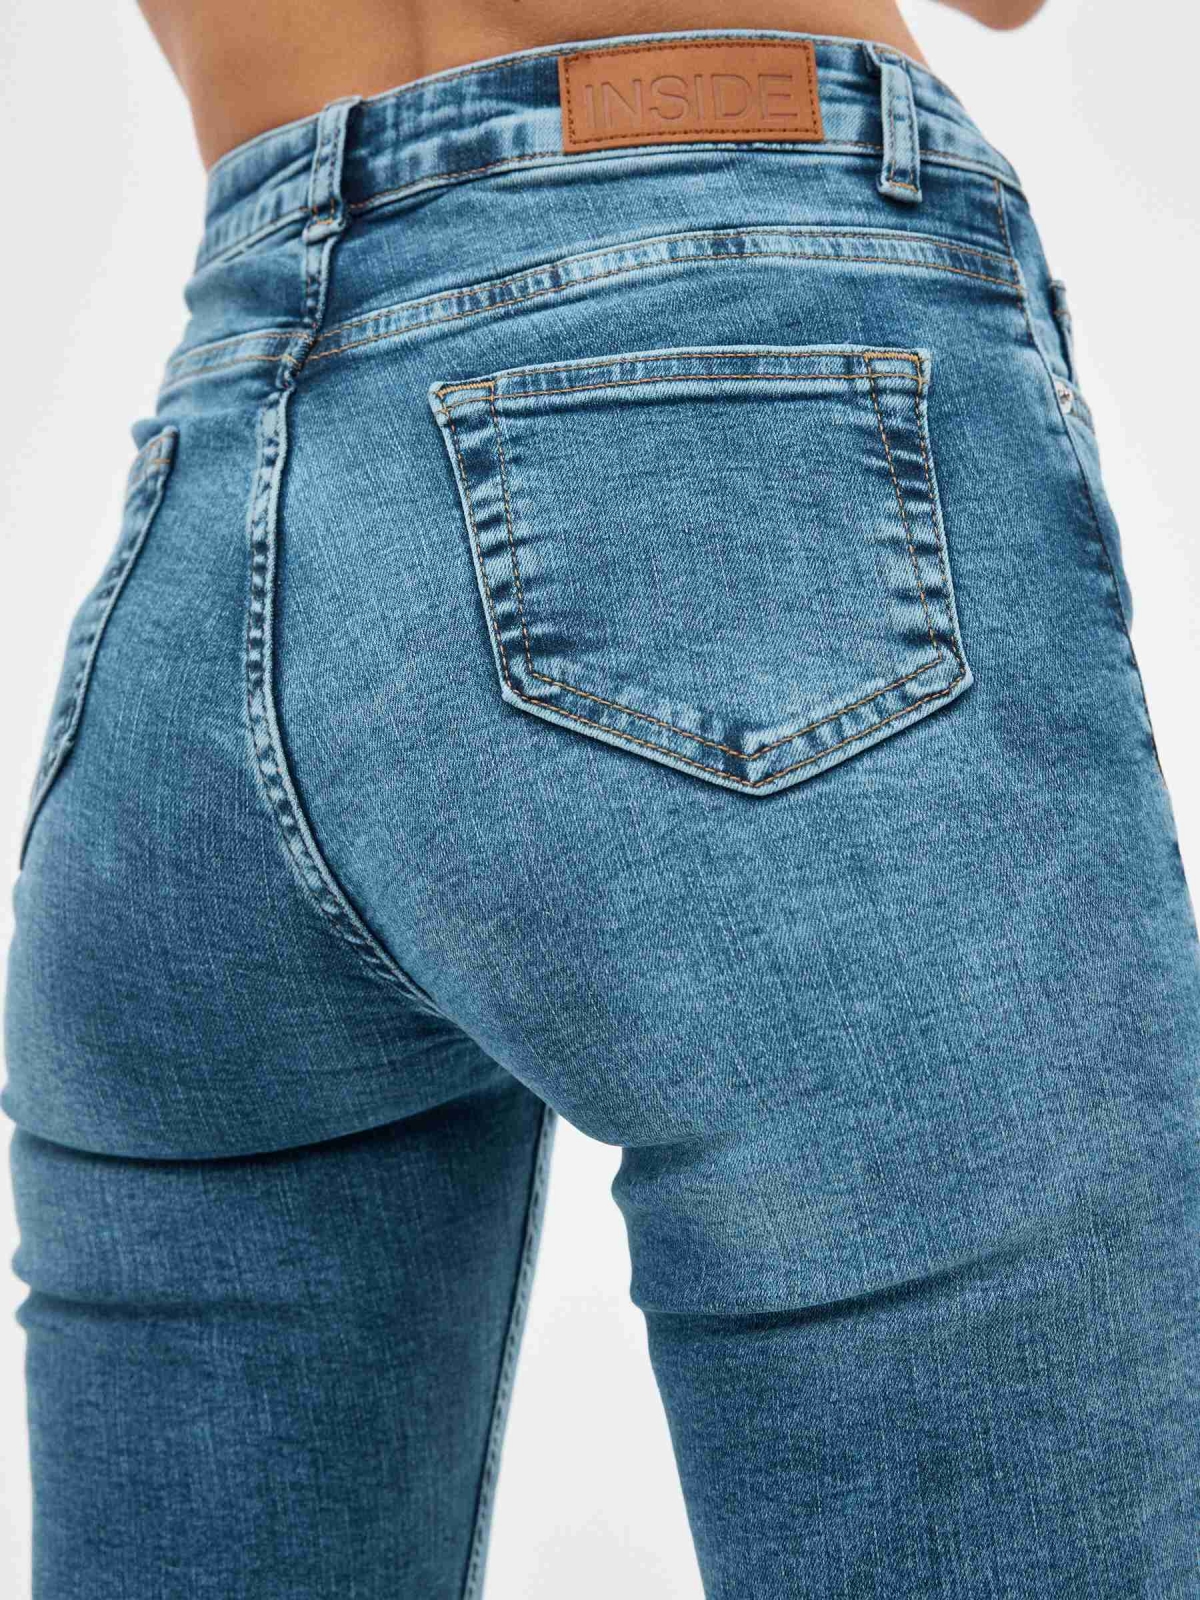 Medium Skinny Jeans blue detail view